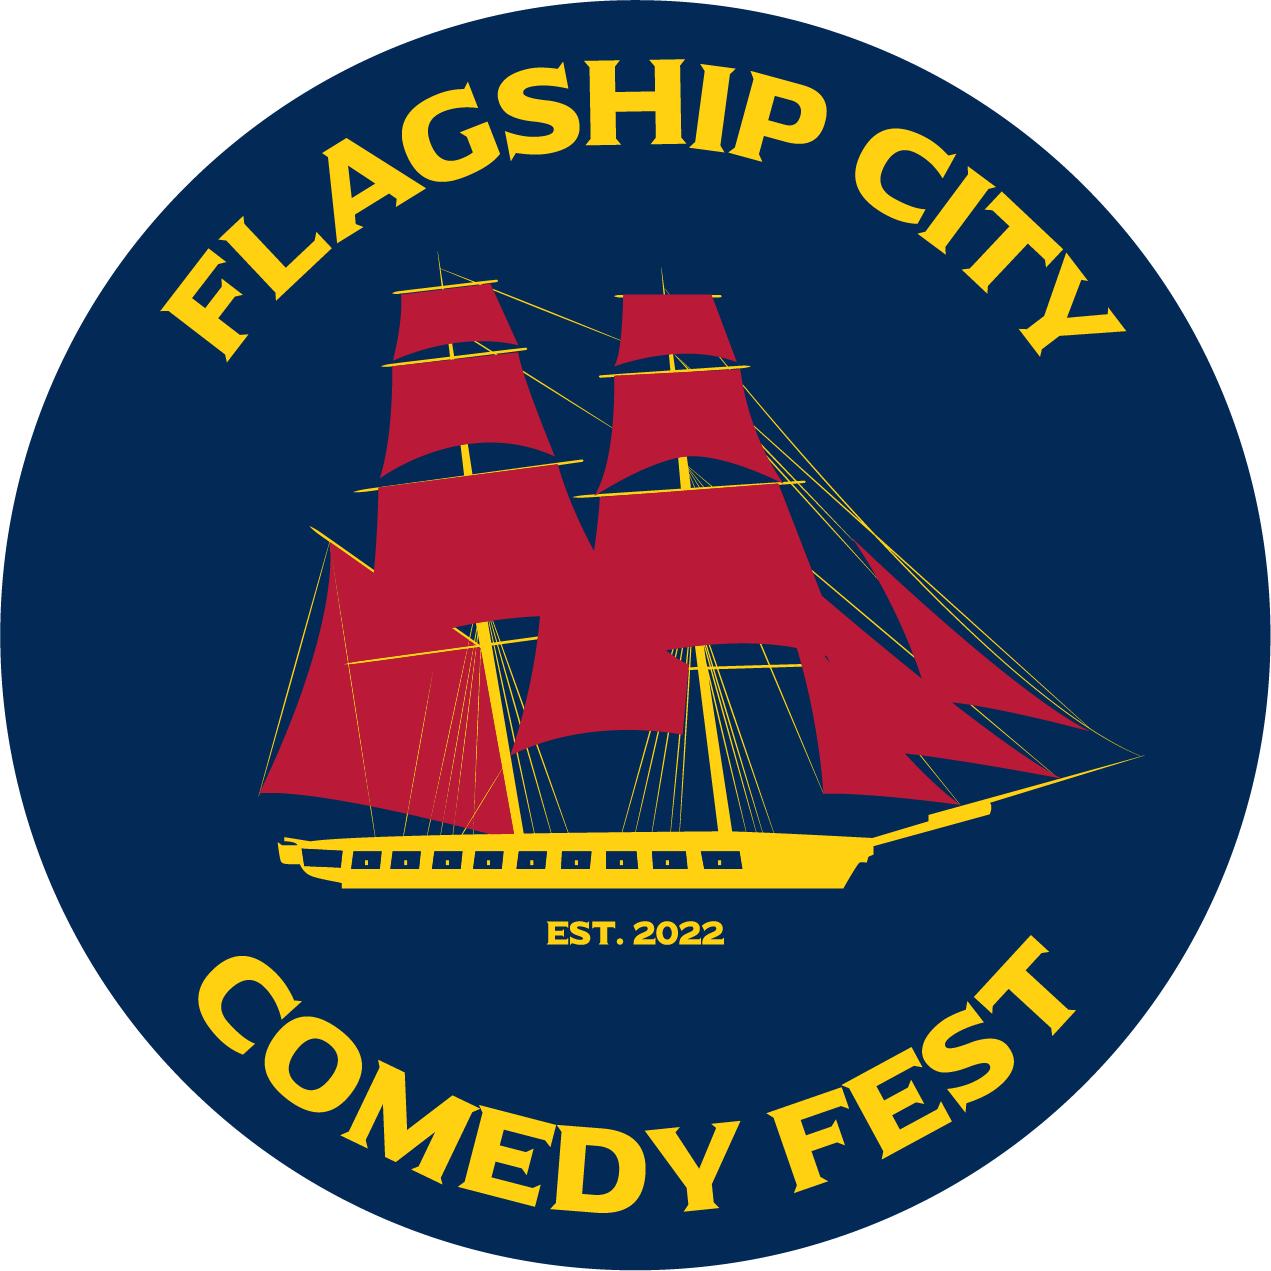 Flagship City Comedy Fest